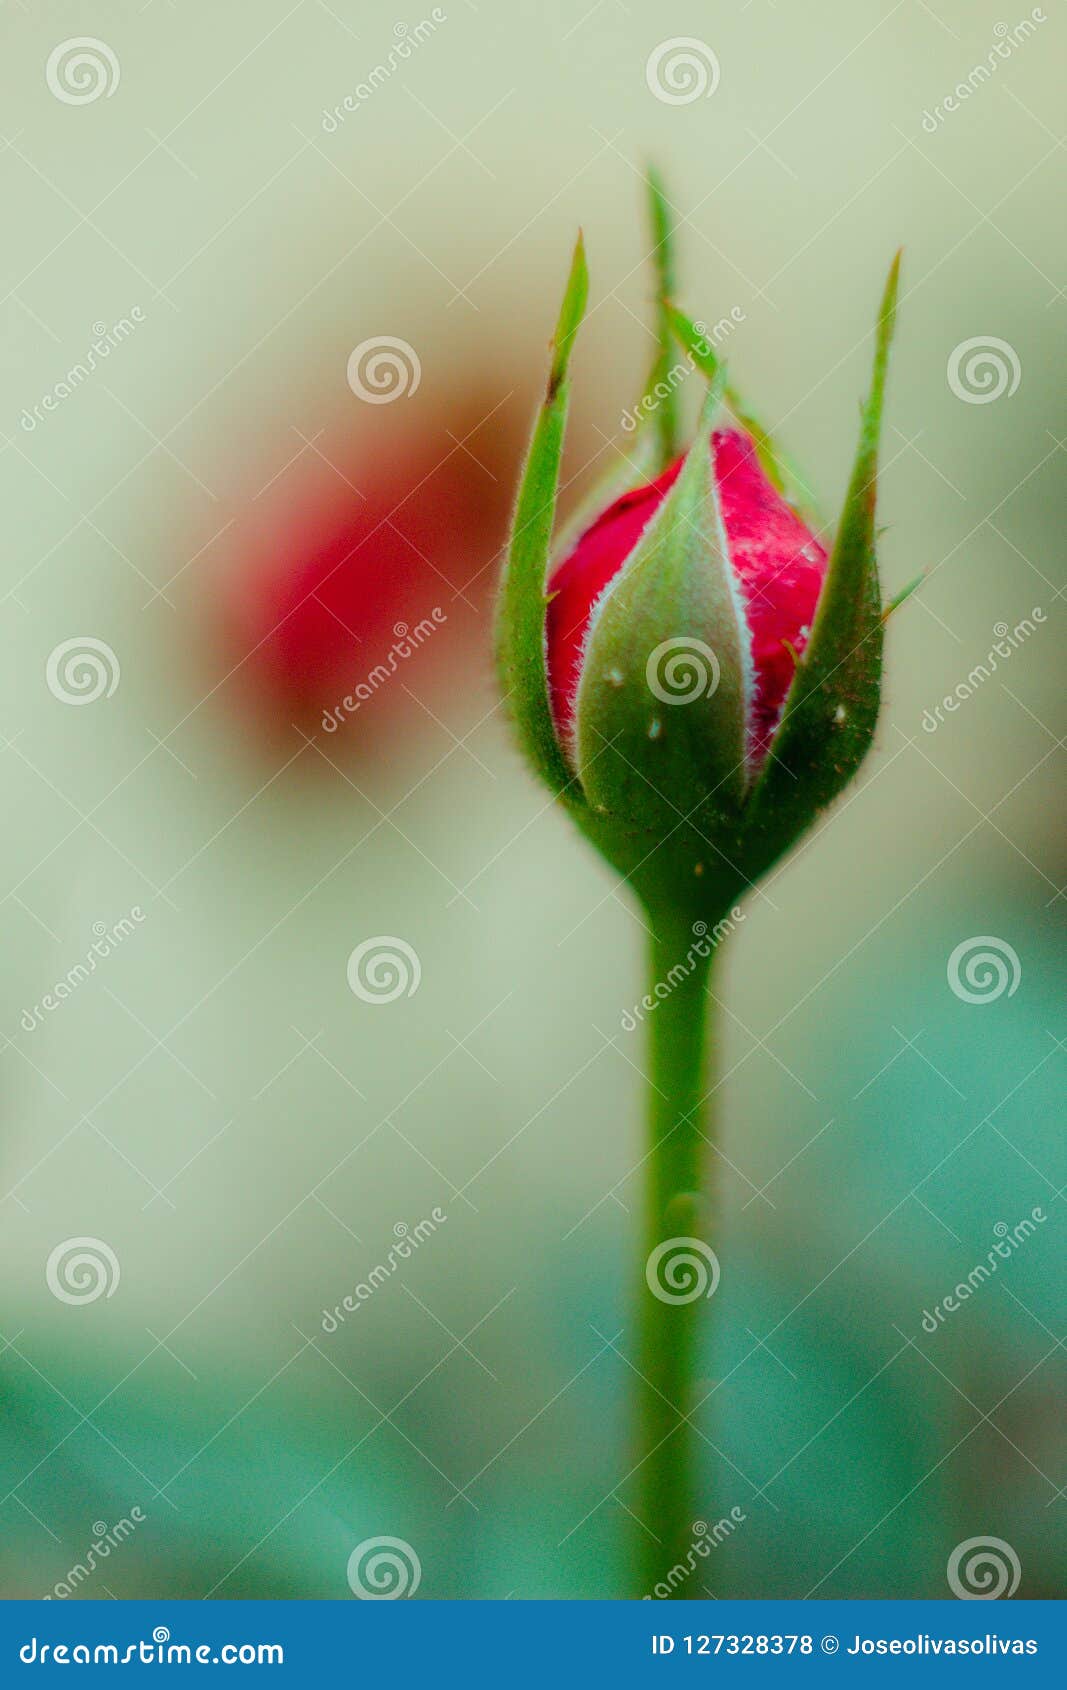 my little beautiful rose